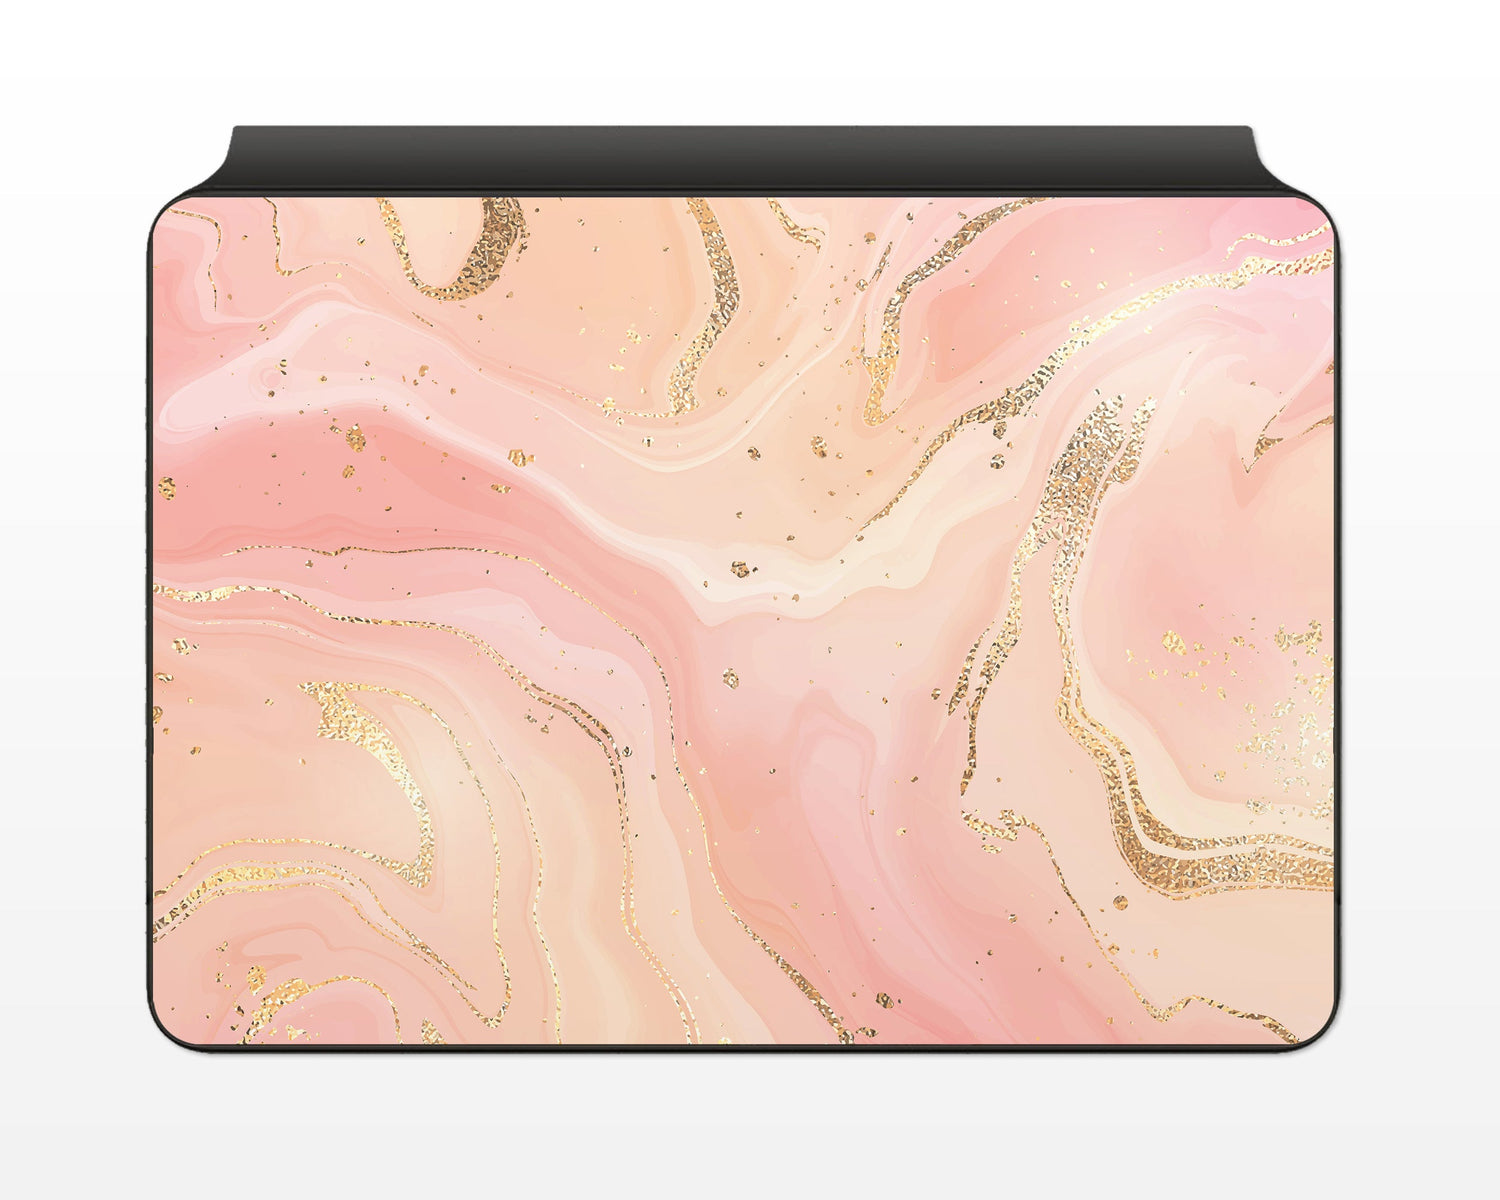 Lux Skins Magic Keyboard Ethereal Peach Pink Marble iPad Air Skins - Pattern Marble Skin